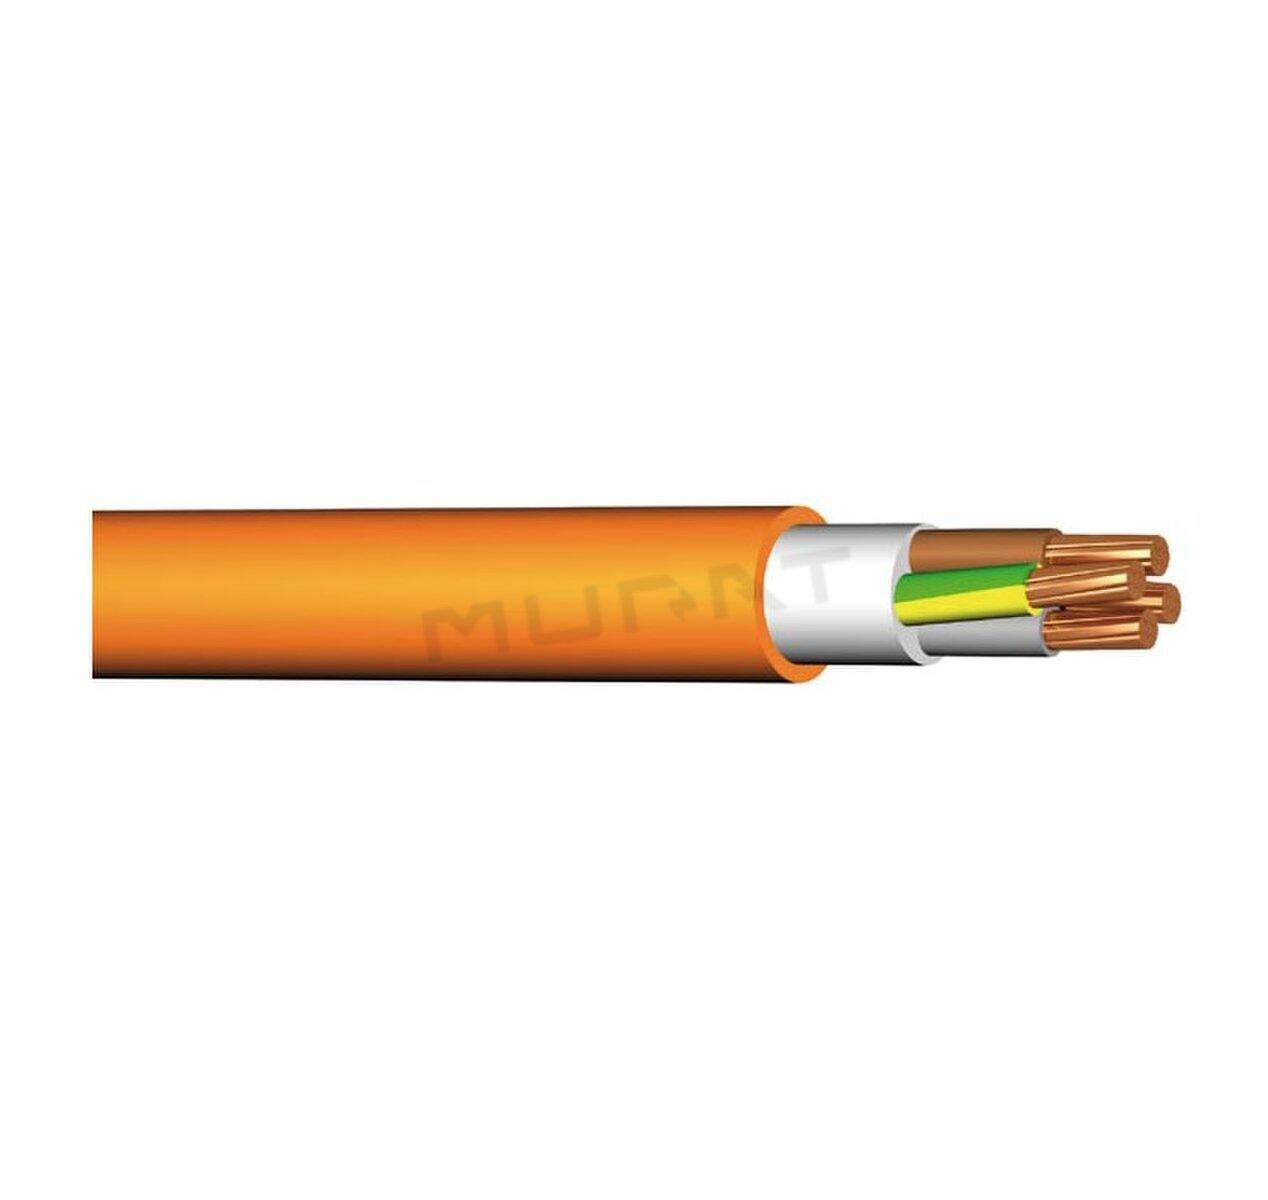 Kábel PRAFlaSafe X-O 4x1,5 mm2 RE B2ca s1d1a1